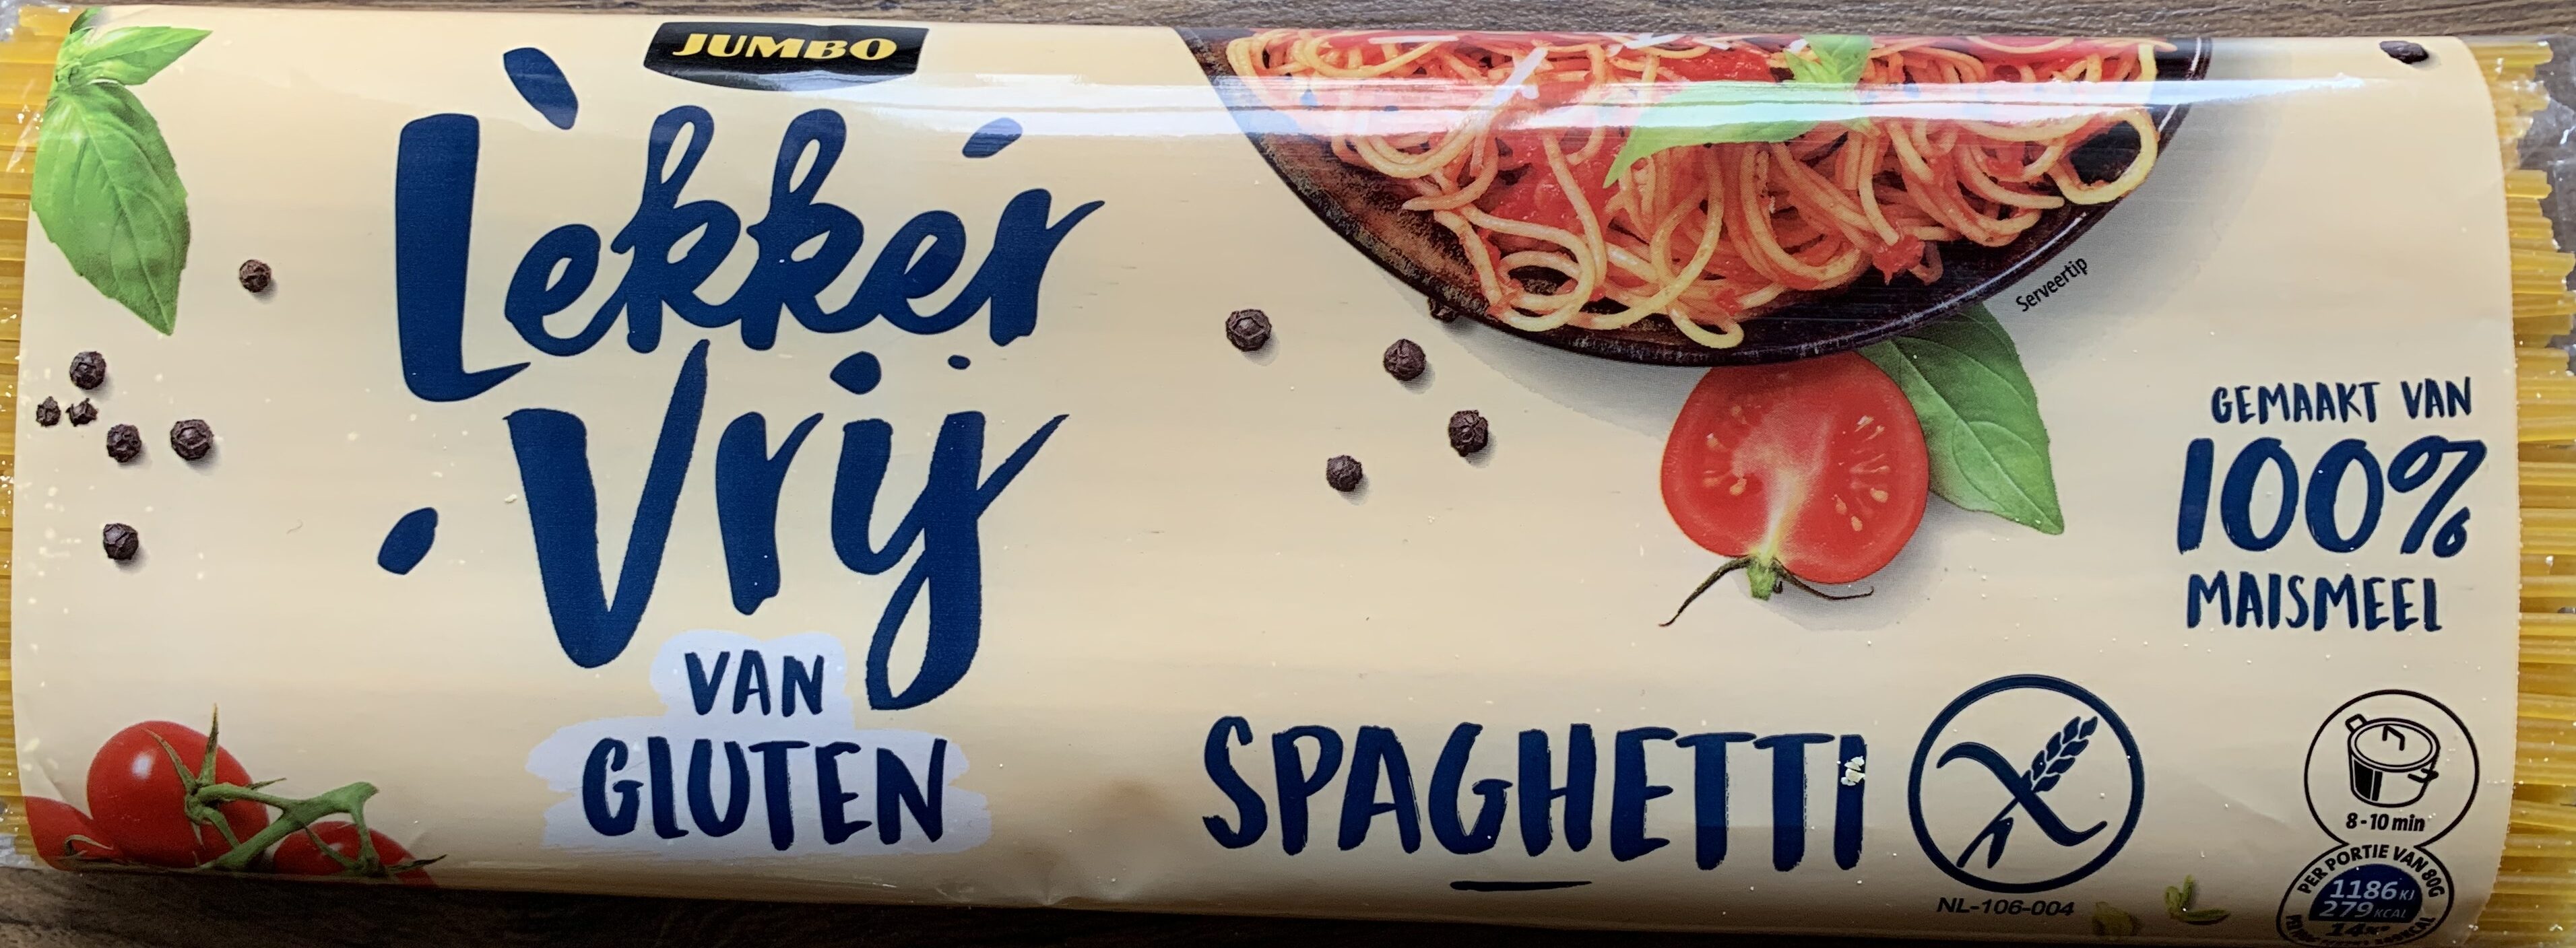 spaghetti - Product - en